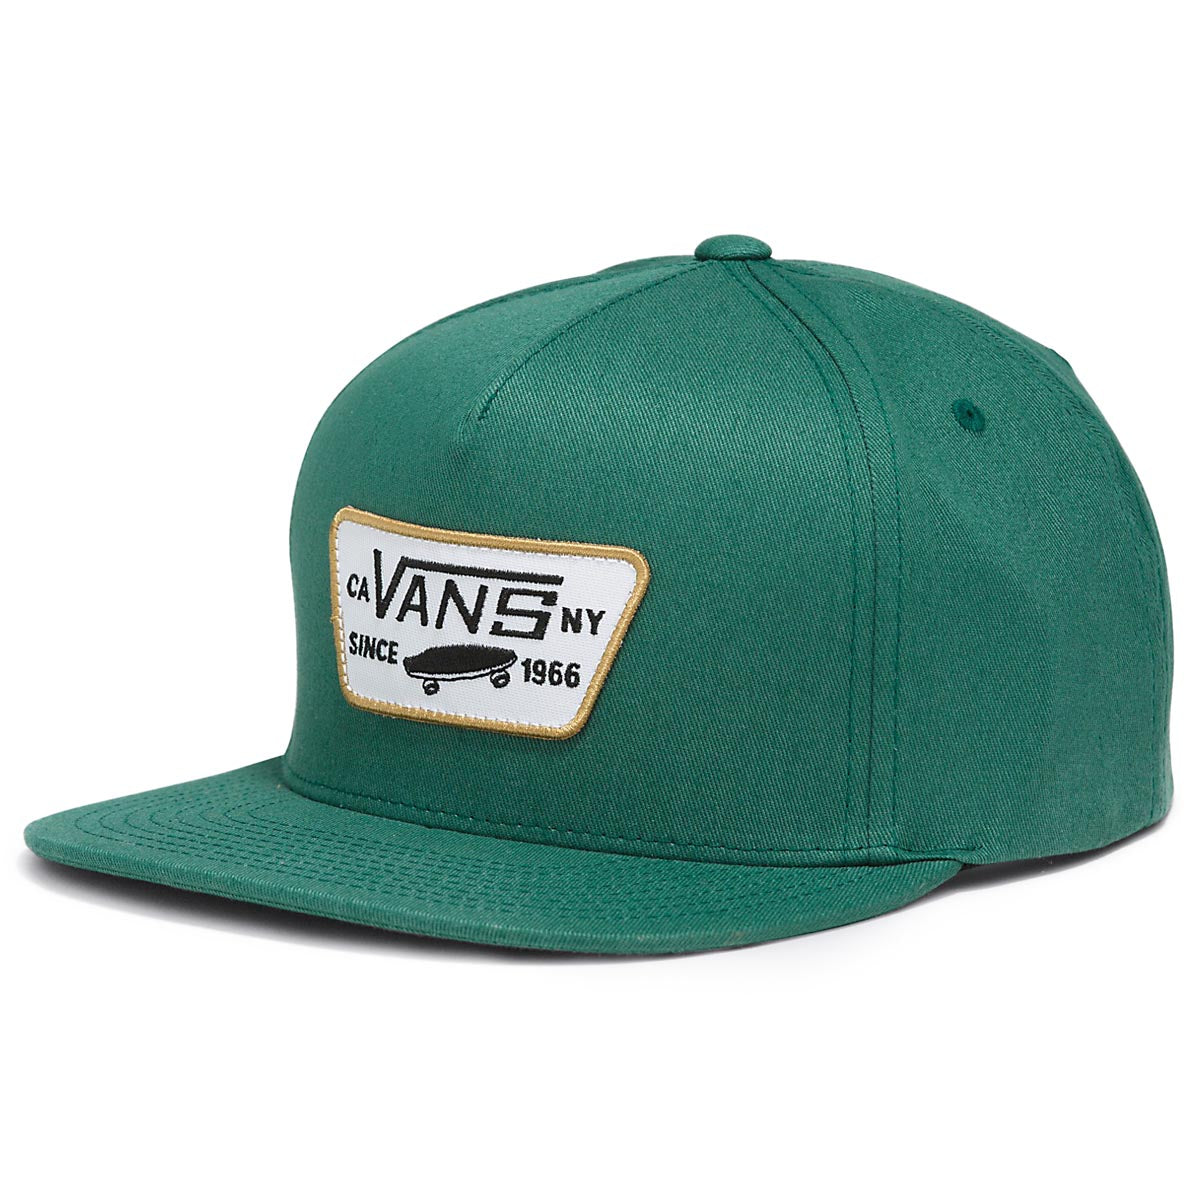 Vans Full Patch Snapback Hat - Bistro Green image 1